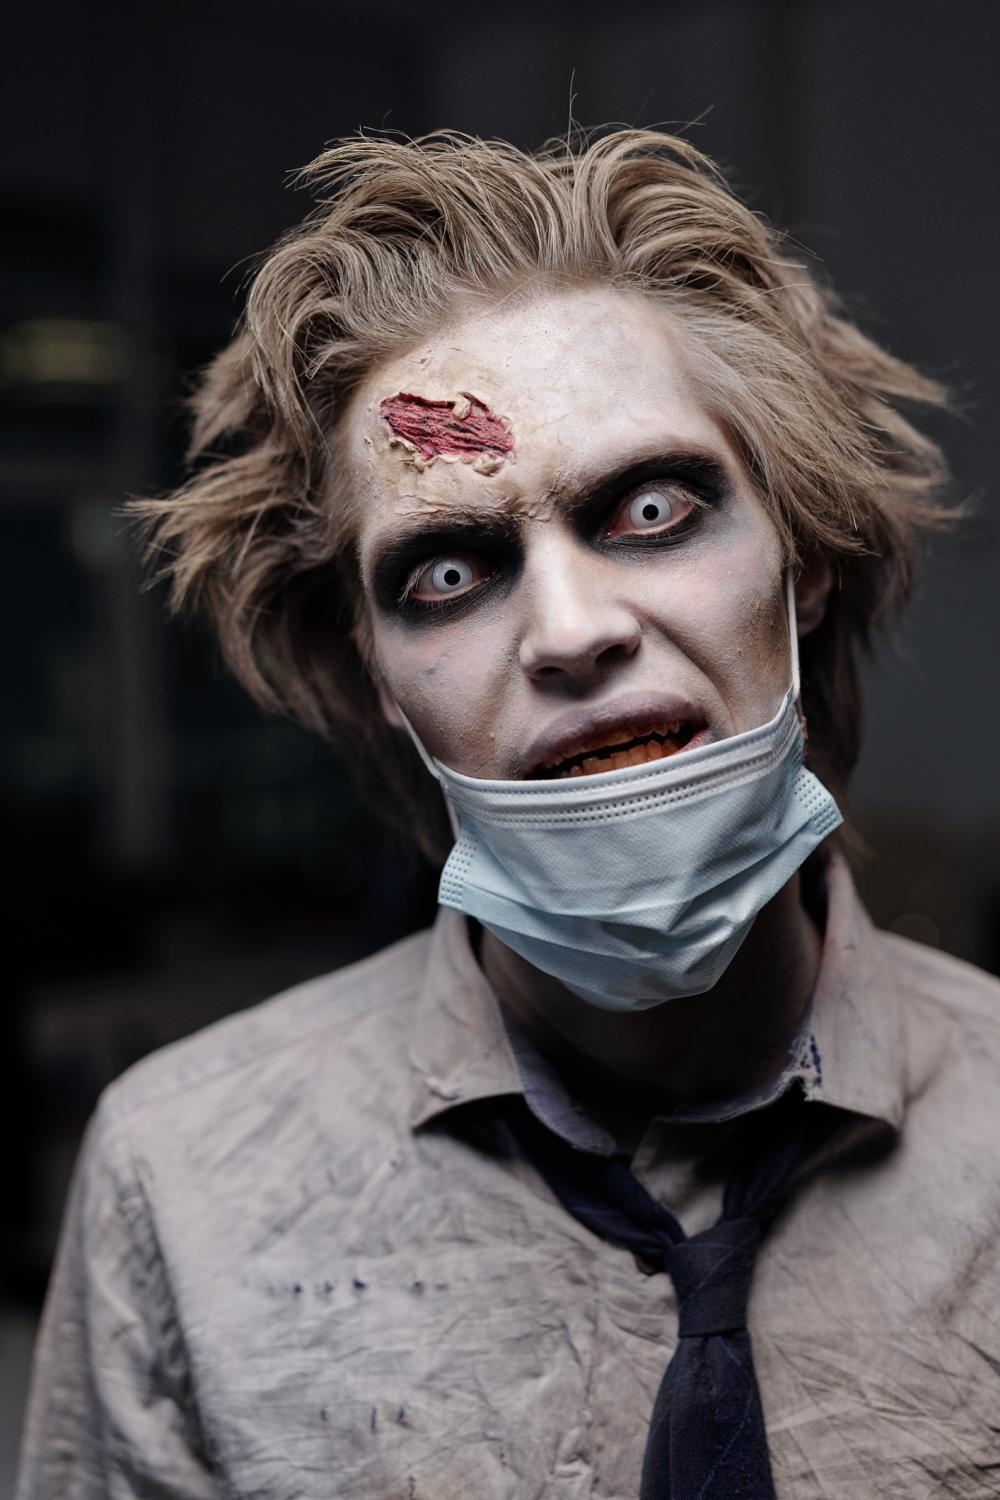 eksotisk bestøver mode 50 Scary Halloween Makeup Ideas for Men - Halloween Face Paint to Try